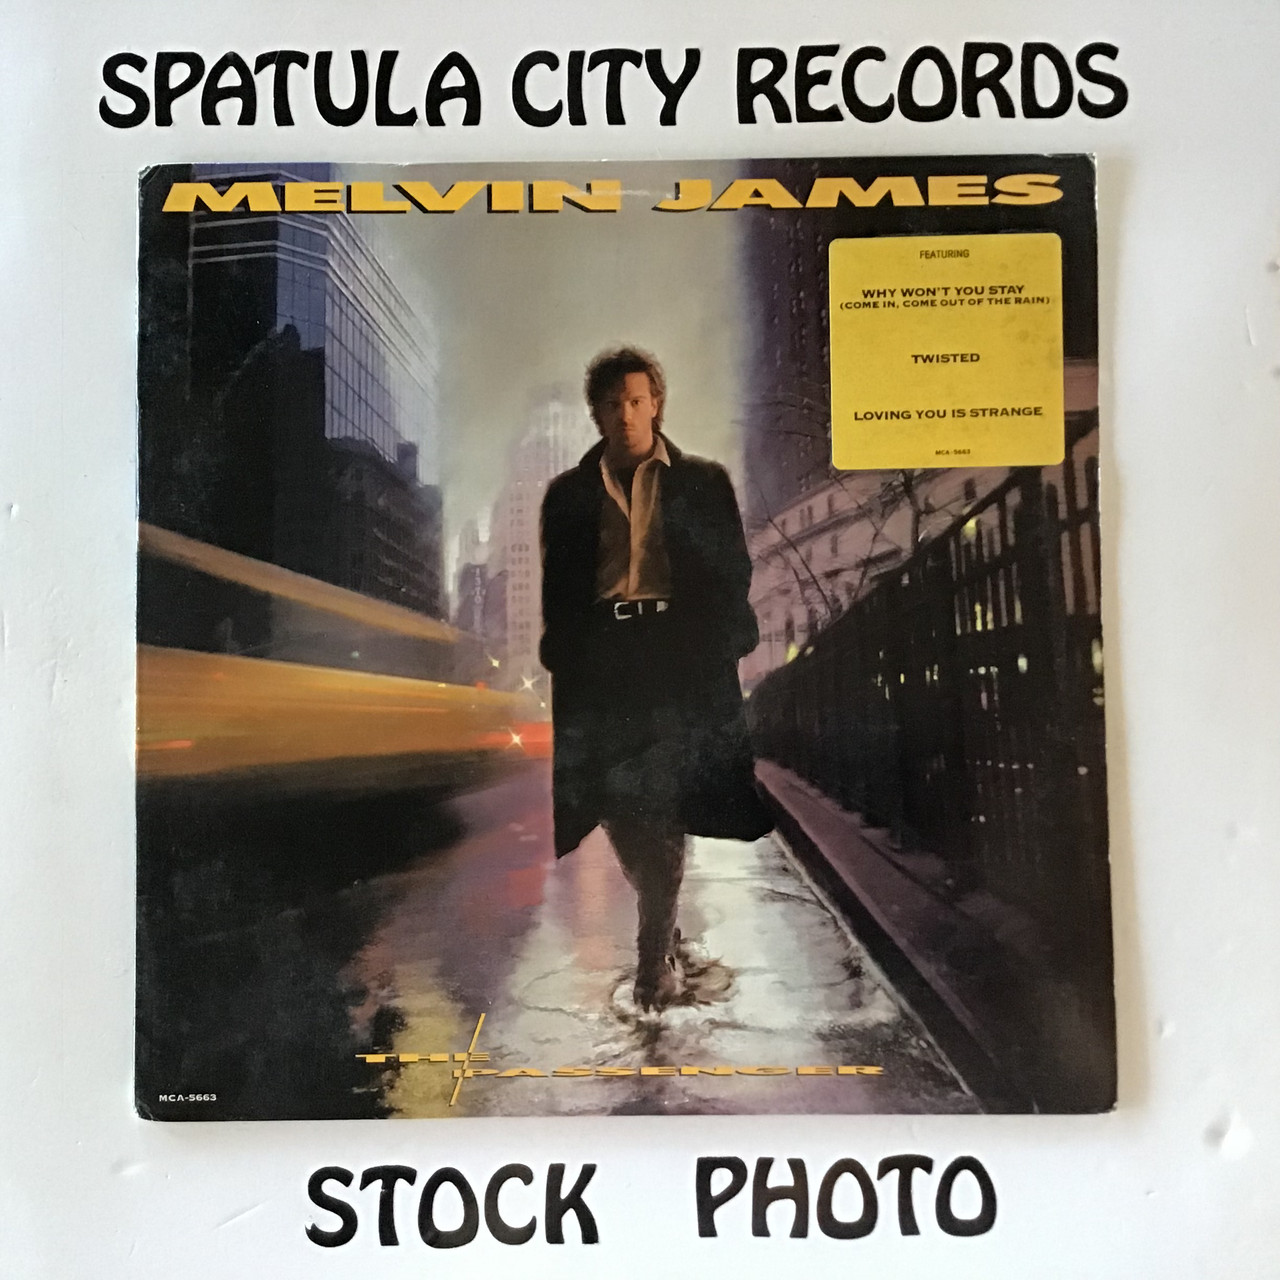 Melvin James - The Passenger - vinyl record album LP